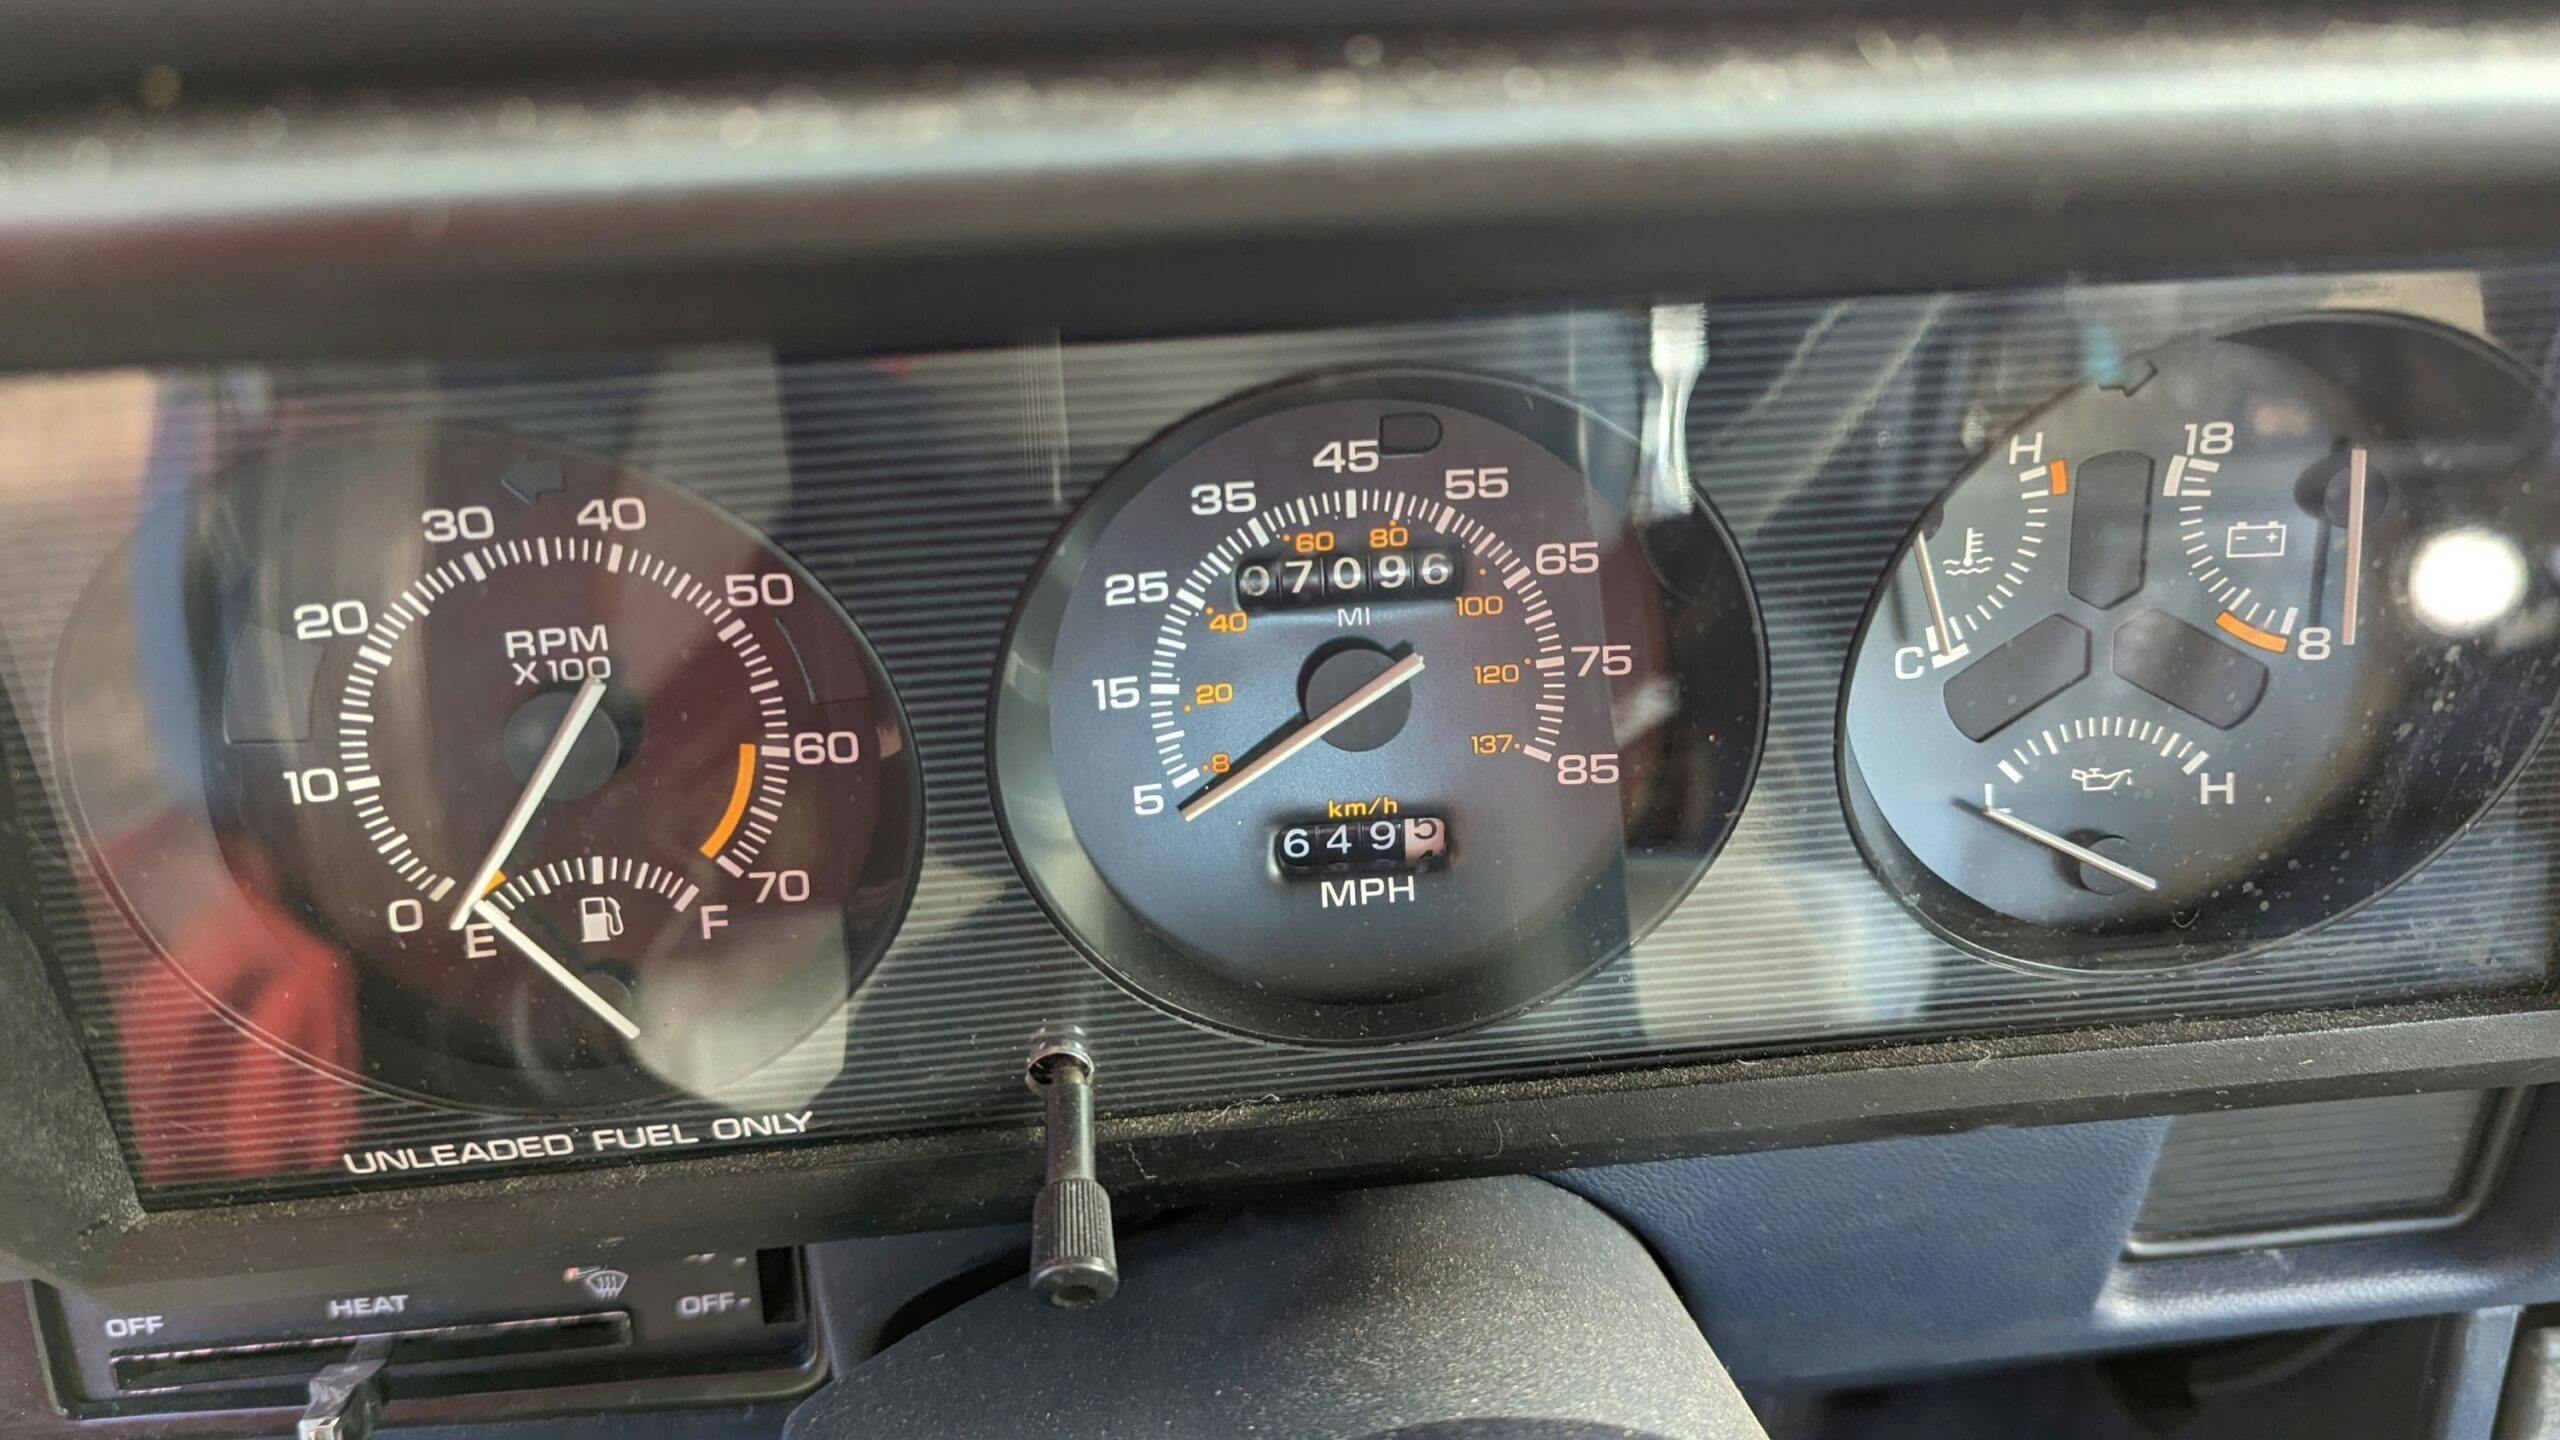 1988 Plymouth Horizon America dash gauges